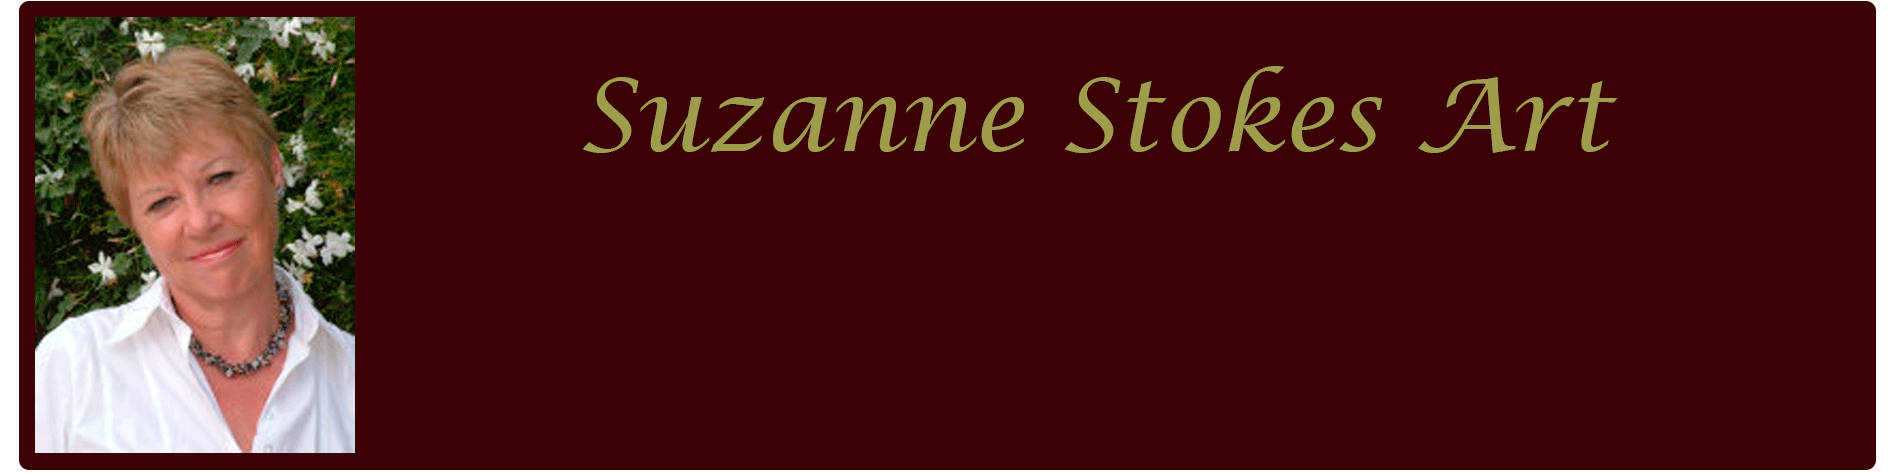 Suzanne Stokes art menu - art lessons, online art tutorials, art work sales  and fine art prints.